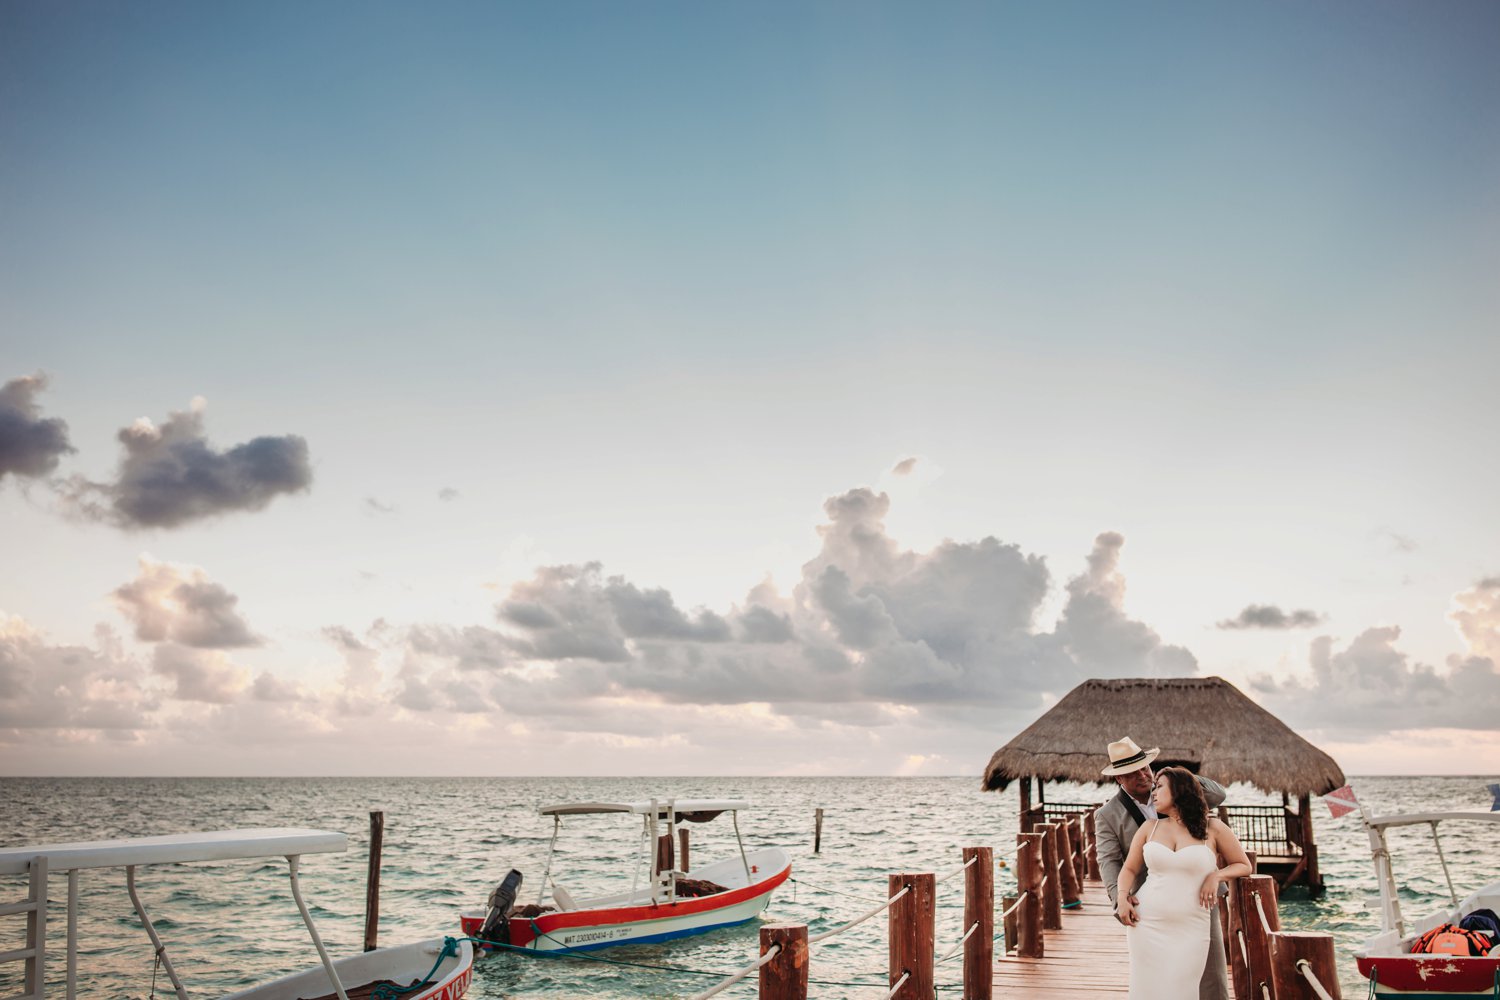  images by feliciathephotographer.com | destination wedding photographer | mexico | tropical | fiji | venue | azul beach resort | riviera maya | bridal portraits | lace dress | grey suit | sunrise | oceanside | romantic | whimsical | cotton candy skies | catamaran | dock cabana | 